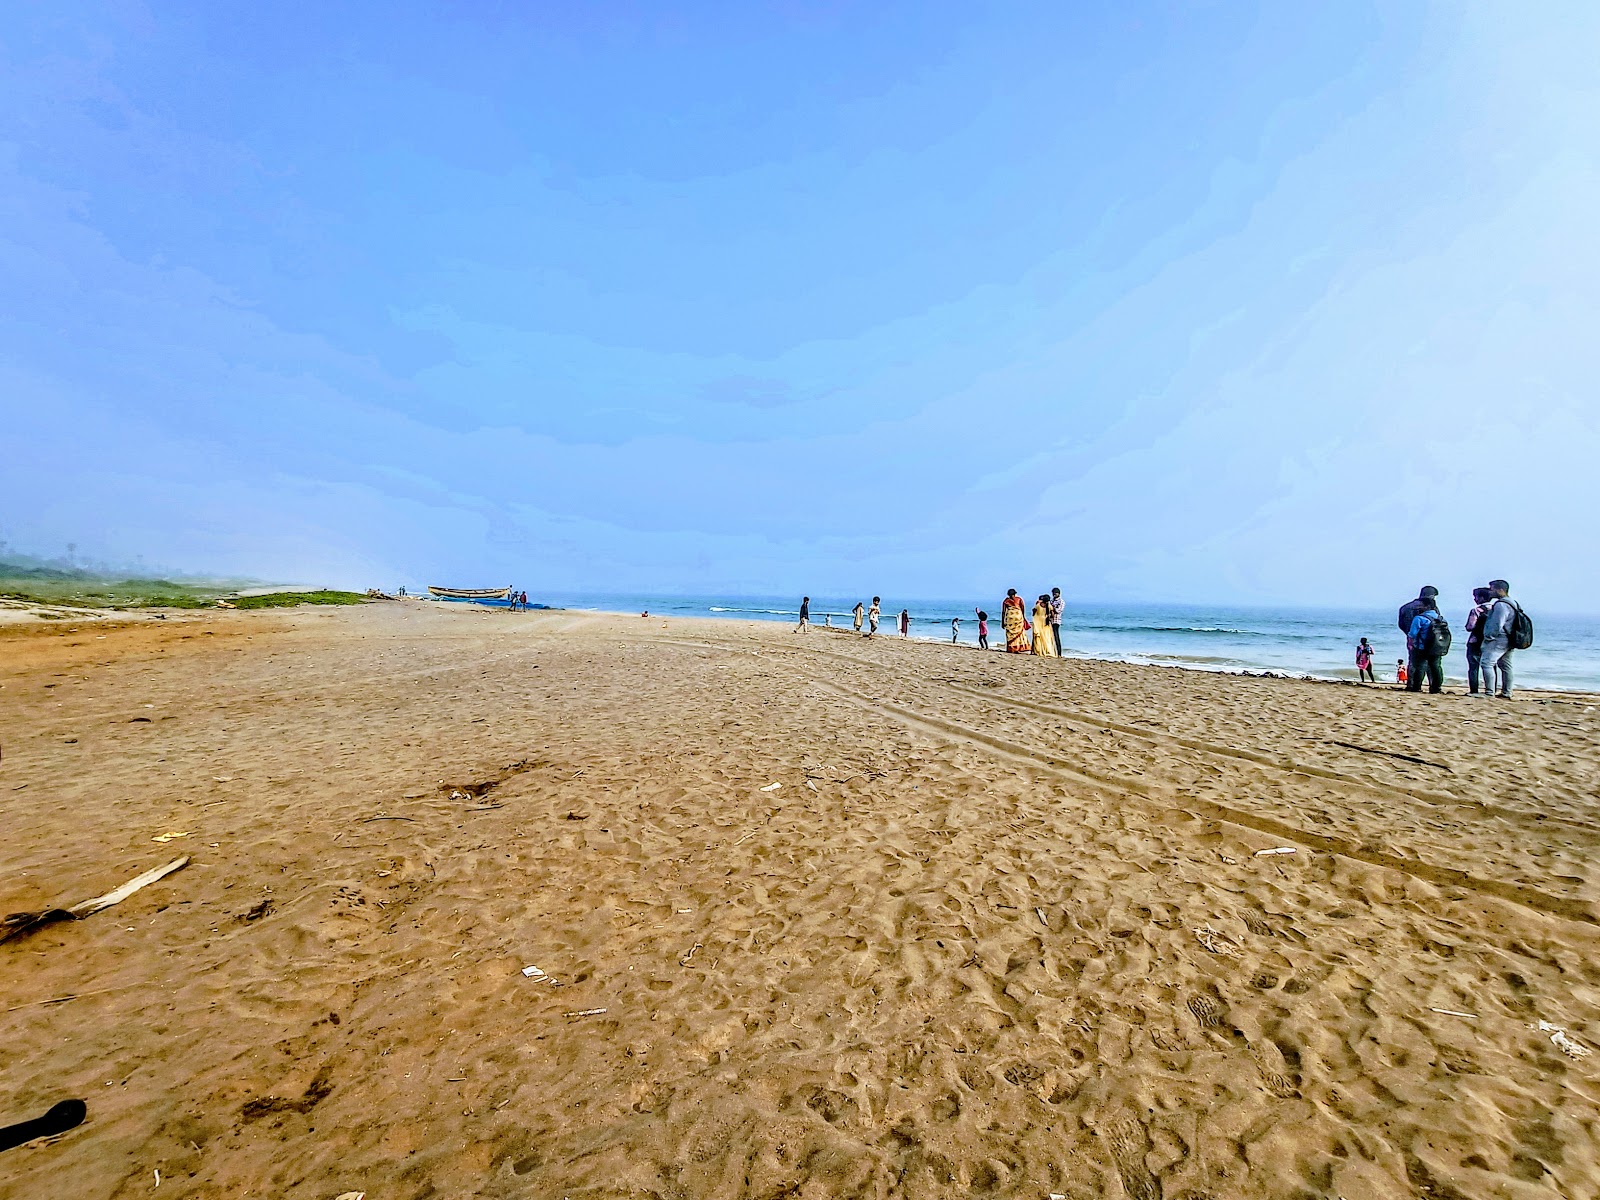 Fotografie cu Sagar Nagar Beach cu nivelul de curățenie in medie